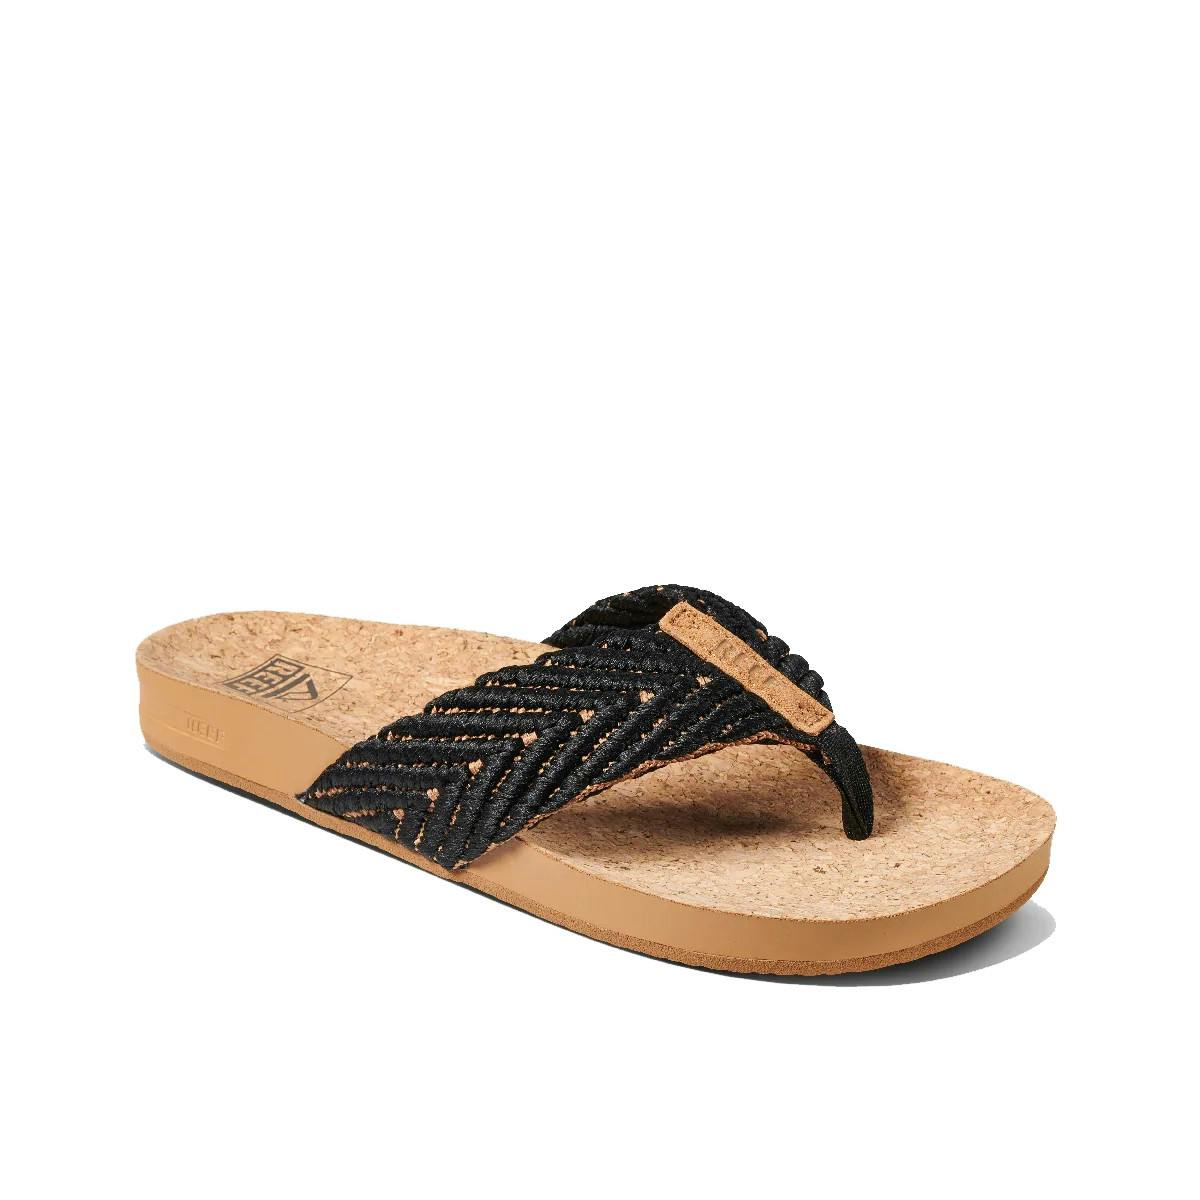 REEF Cushion Strand Sandals Angle - Black/Natural